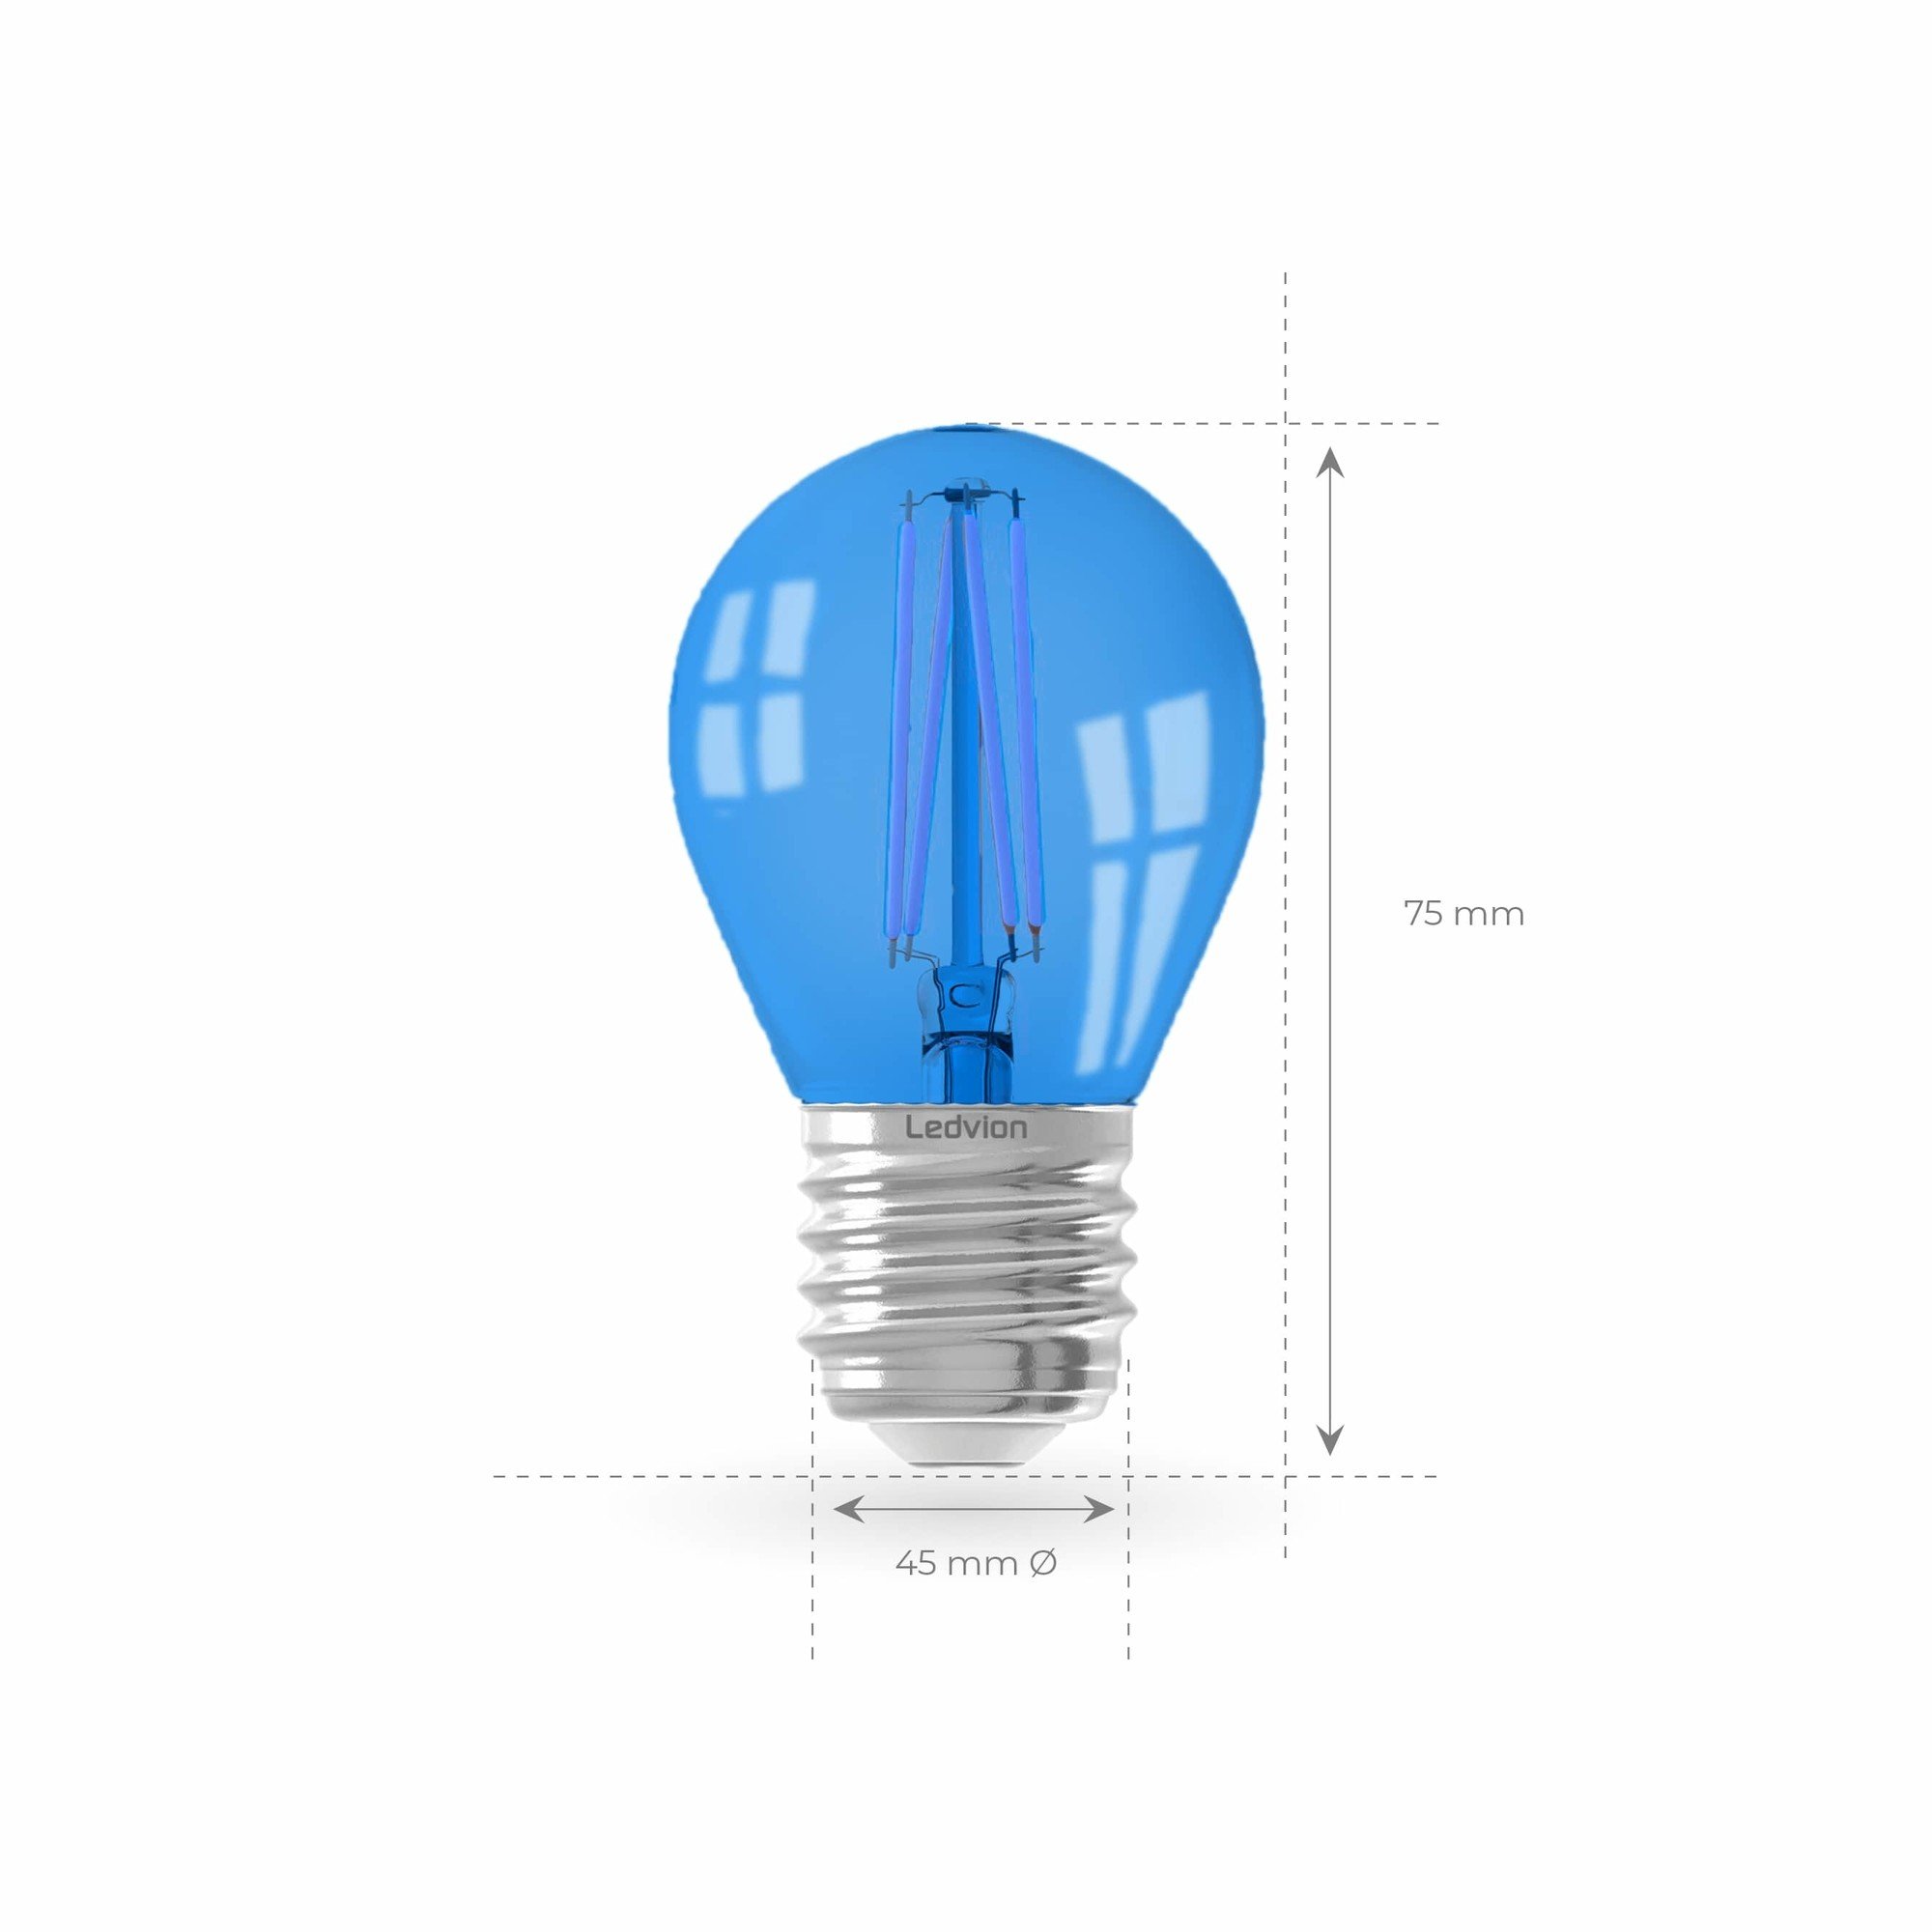 spreiding veel plezier Umeki Ledvion E27 LED Lamp Filament - 1W - 2100K - 50 Lumen - Lightexpert.nl